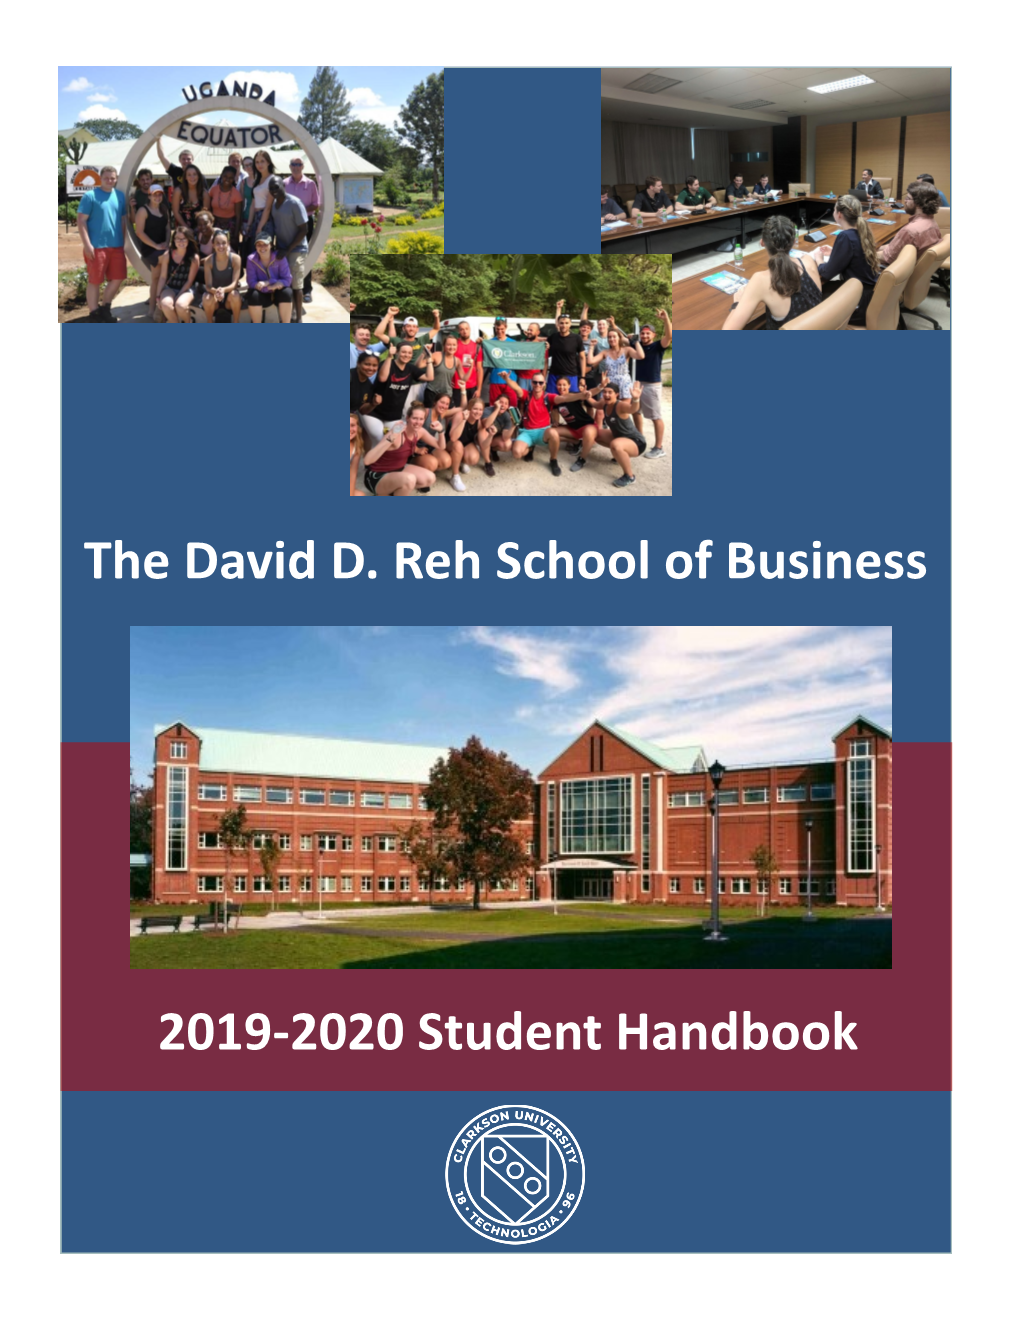 2019-2020 Student Handbook the David D. Reh School of Business